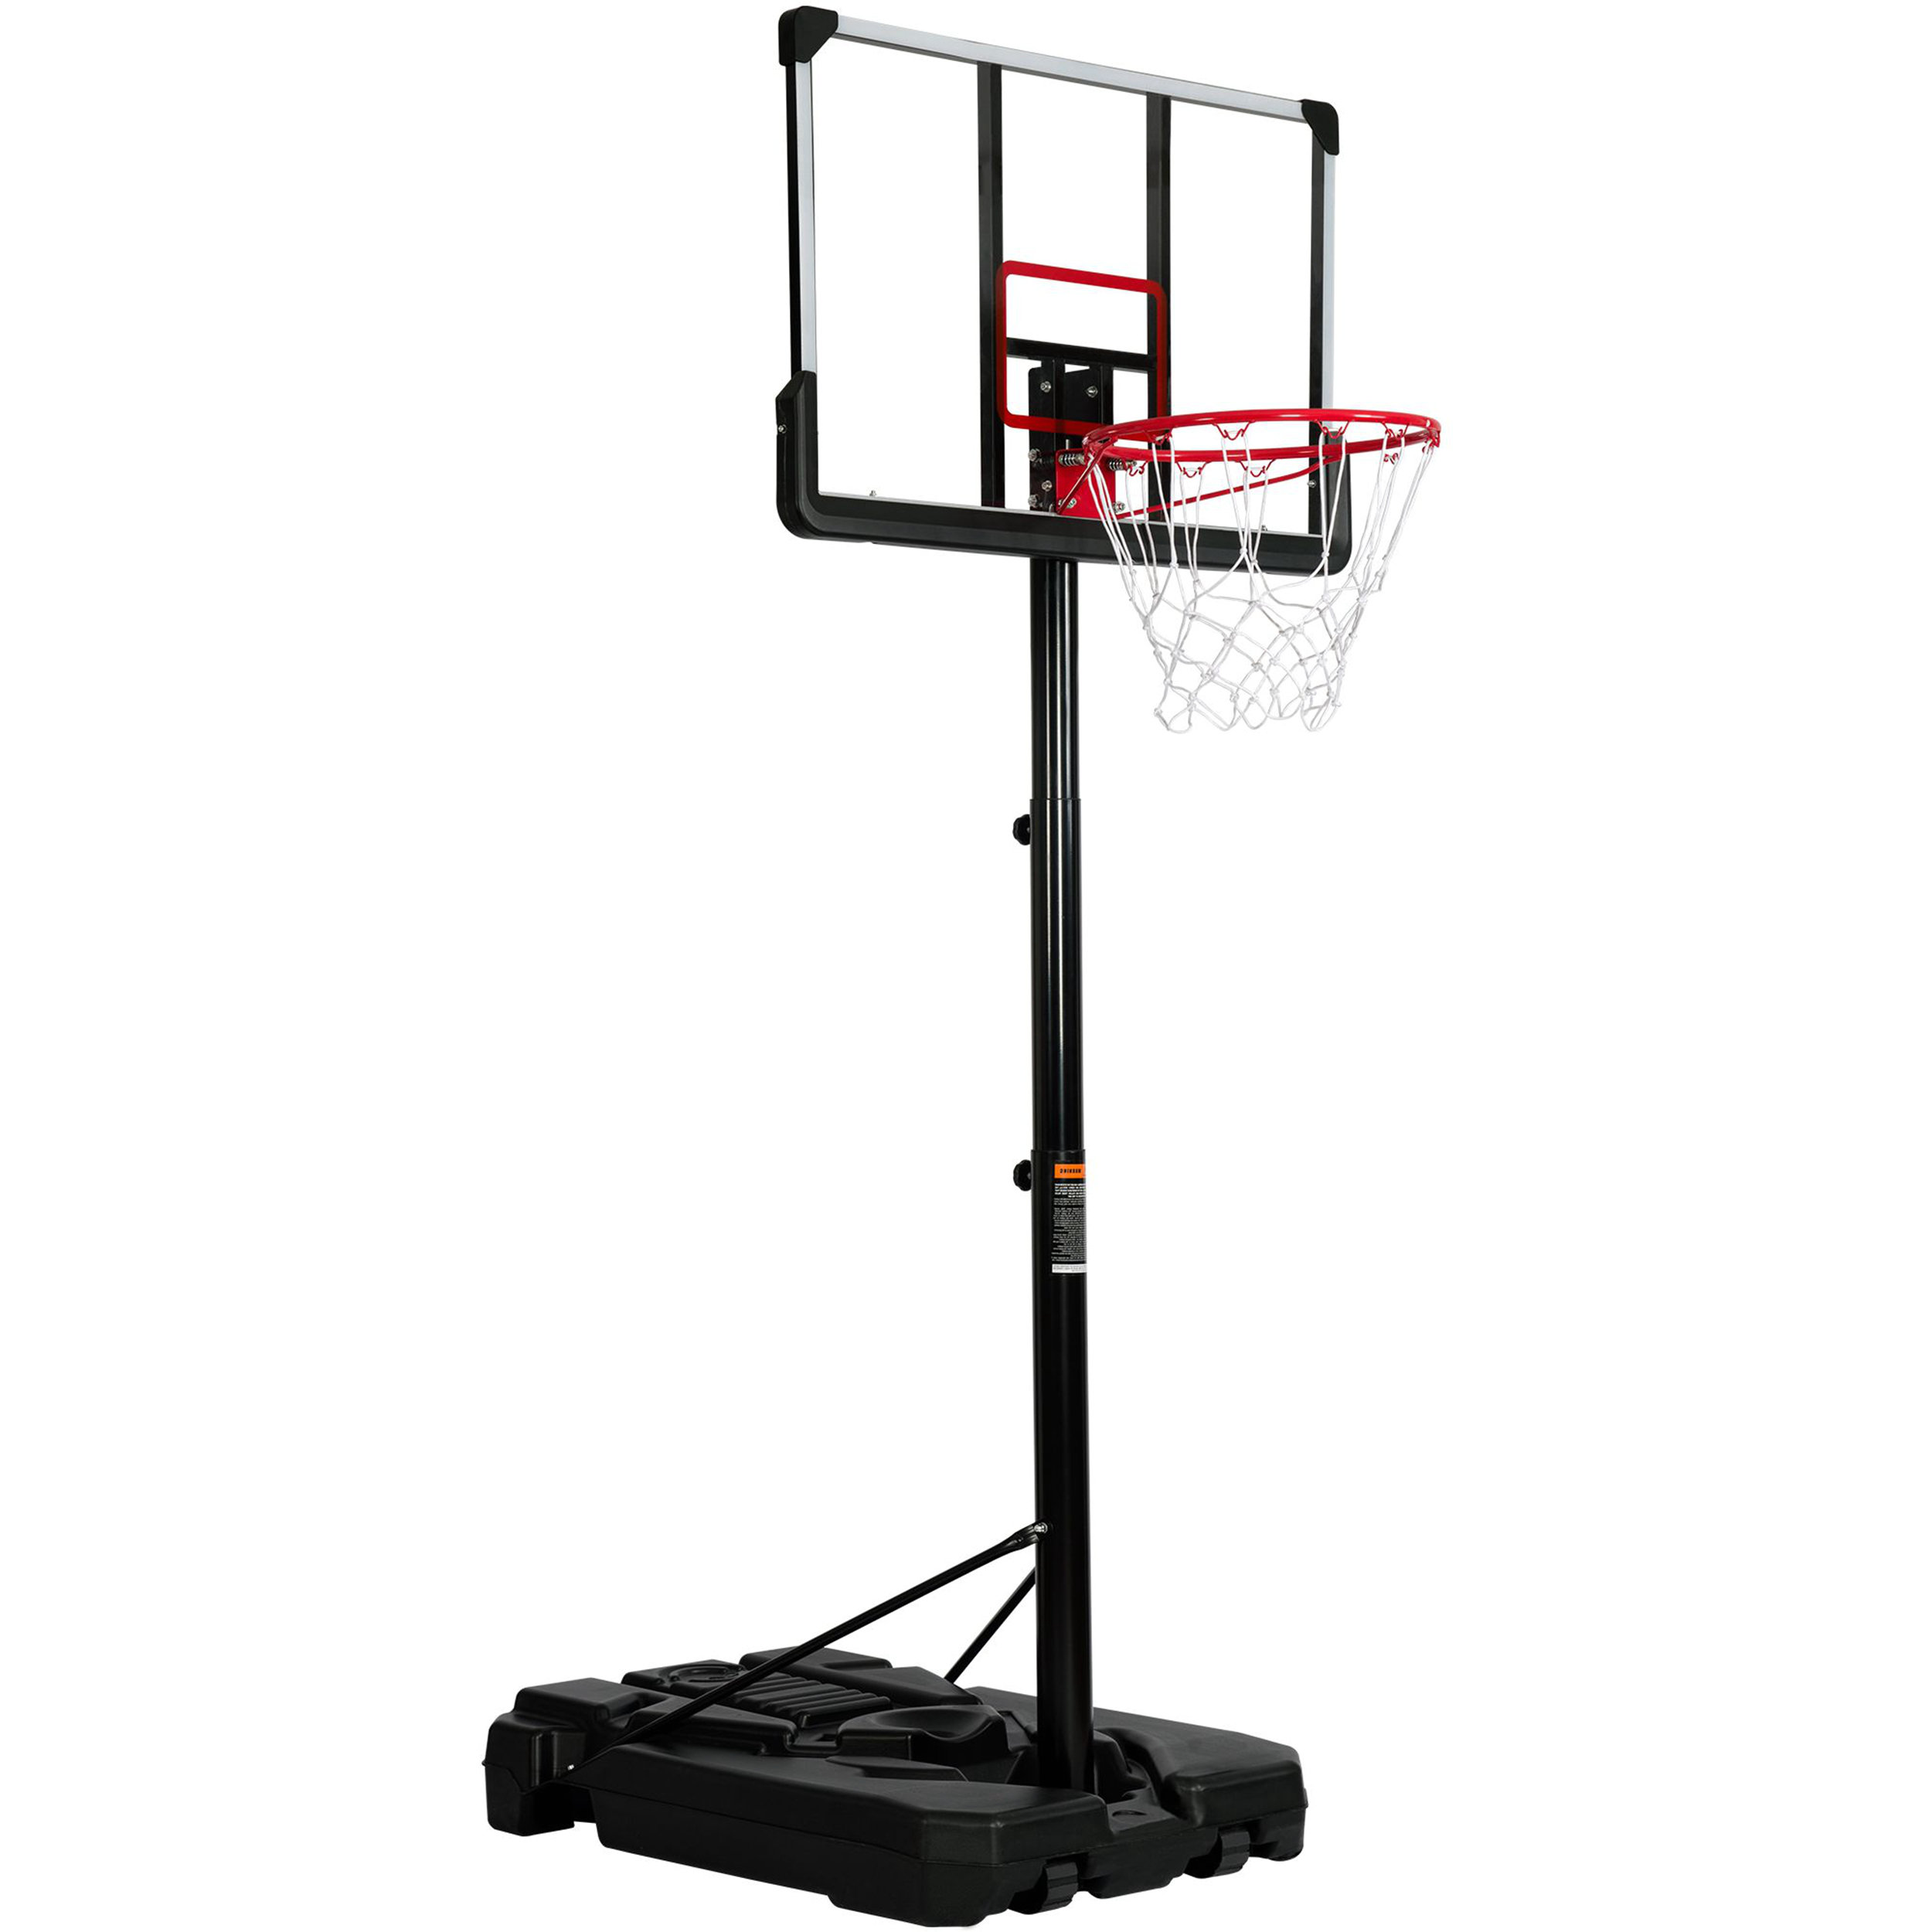 Outdoor Basketball Hoop Adjustable Portable Court Game Play Rolling Wheels Net 